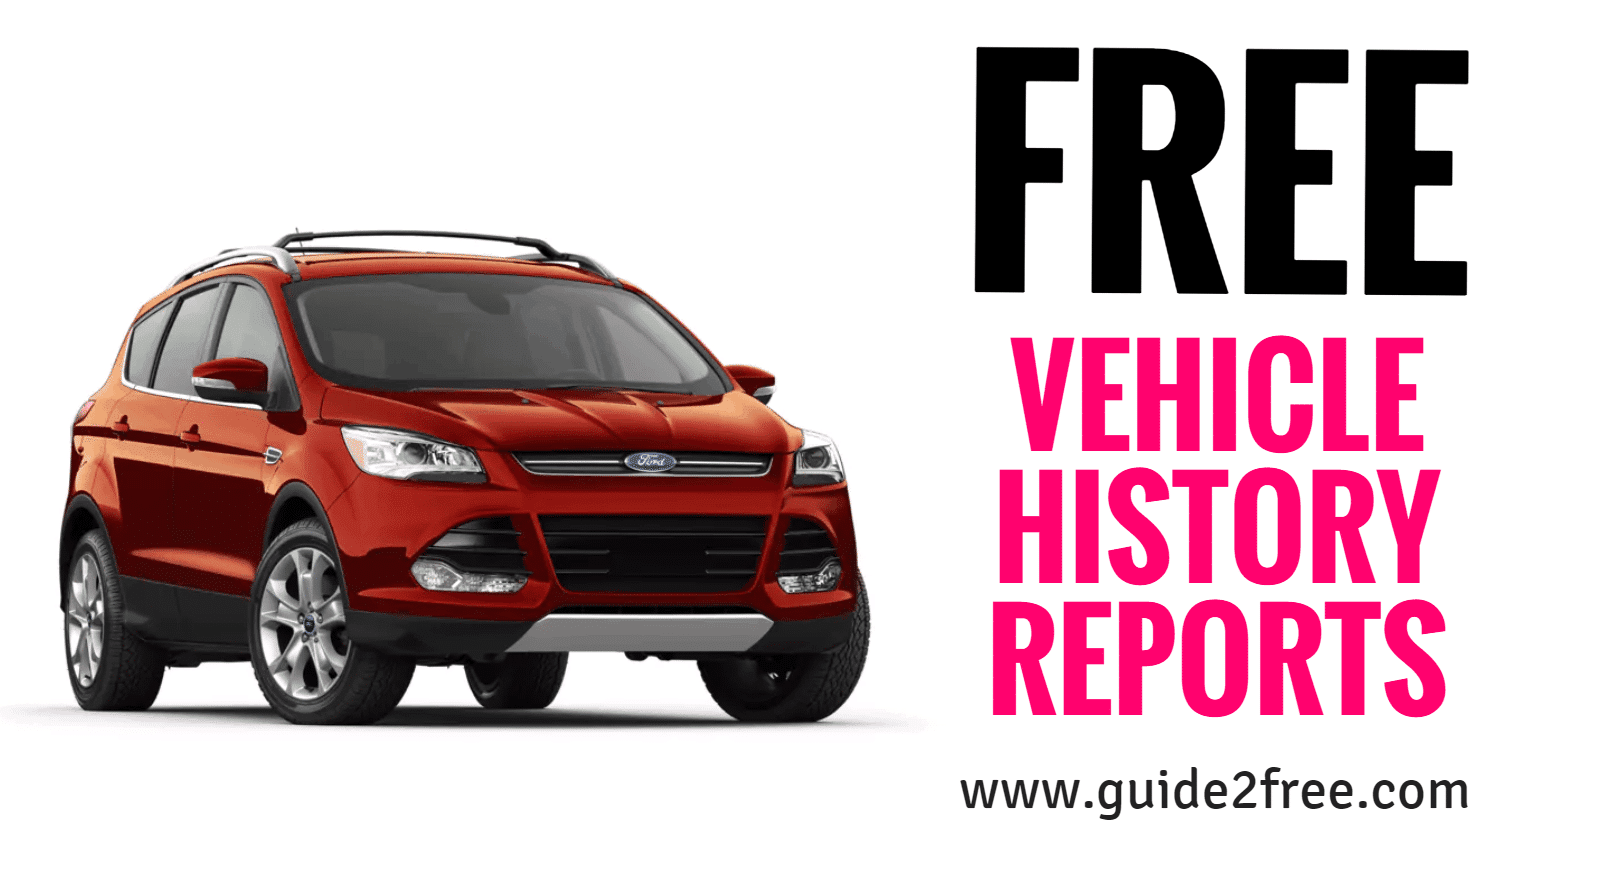 FREE Vehicle History Reports